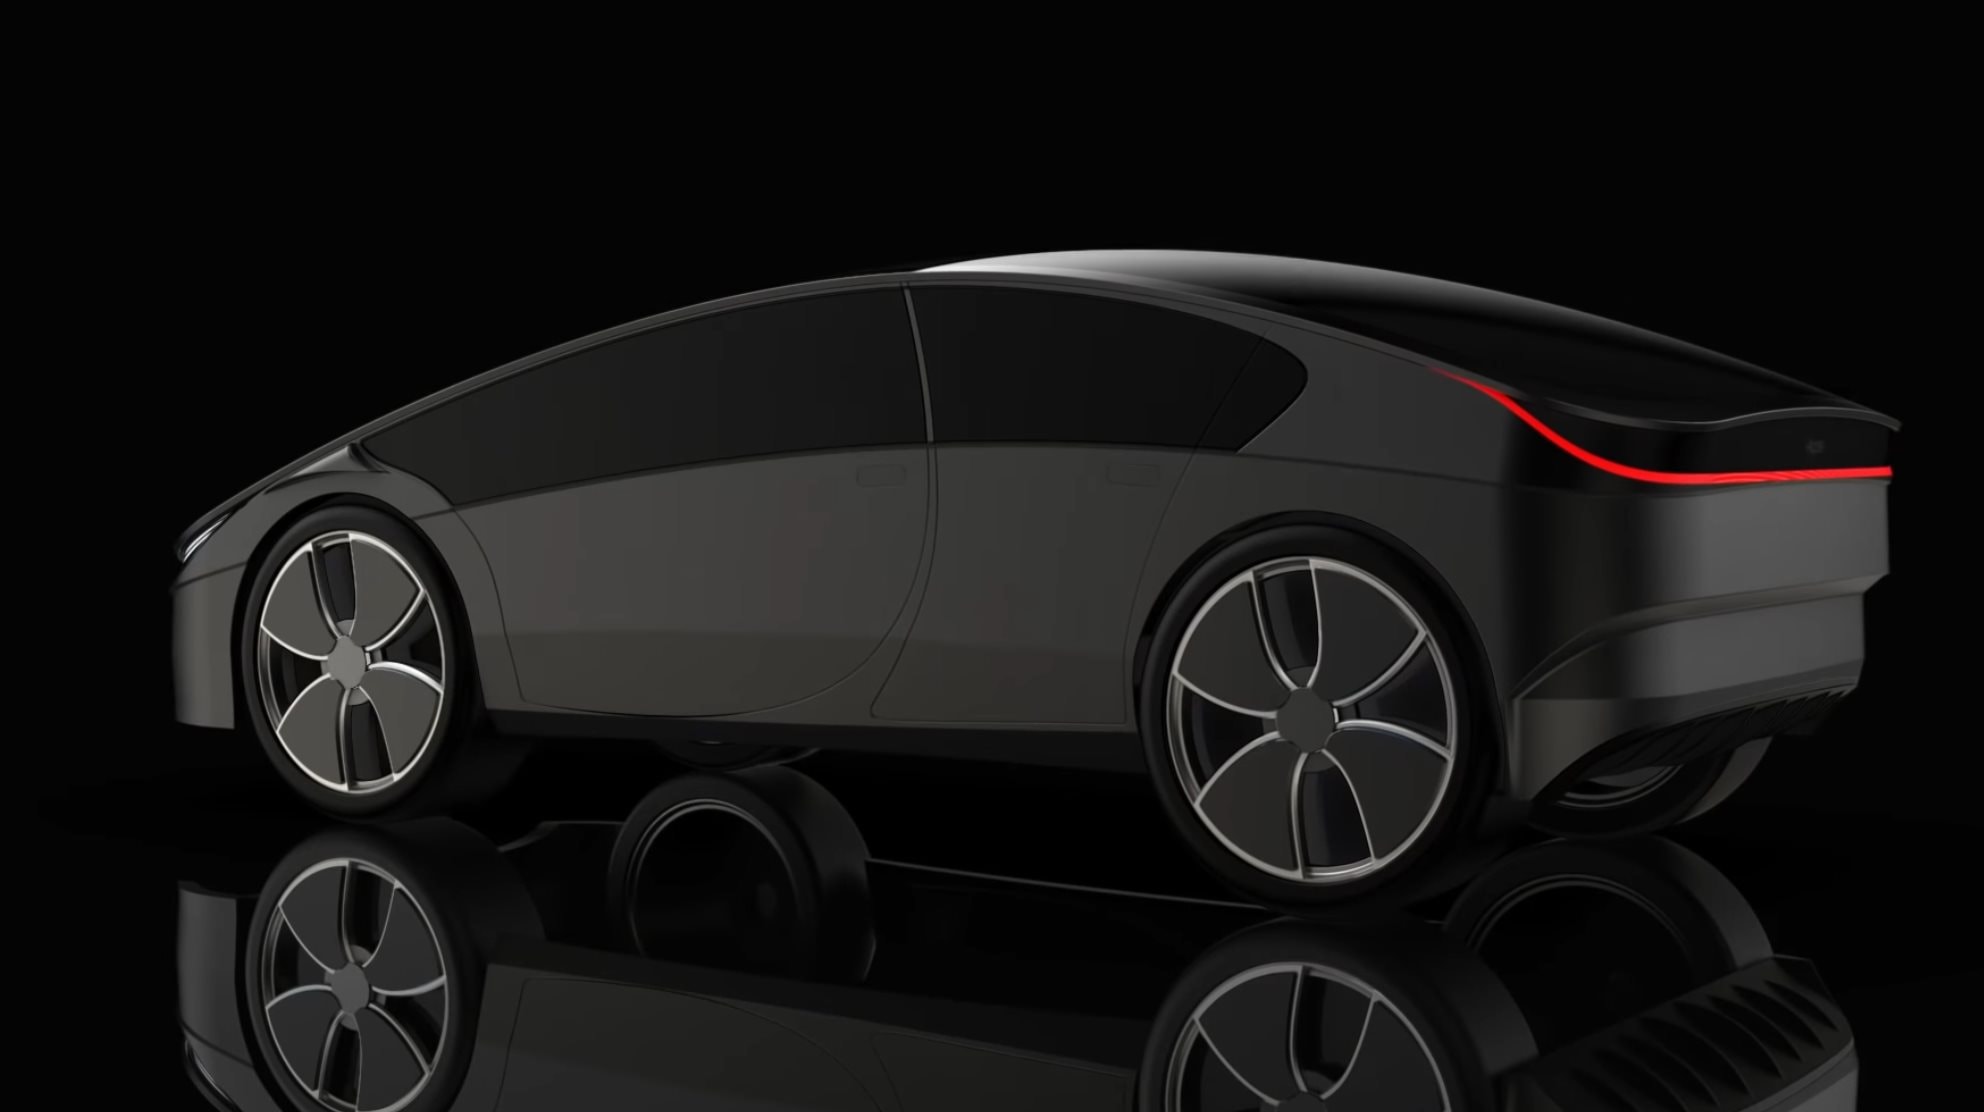 Apple car cars 1. Эпл кар. Прототип Apple car. Машина Apple 2023. Эппл кар 2024.